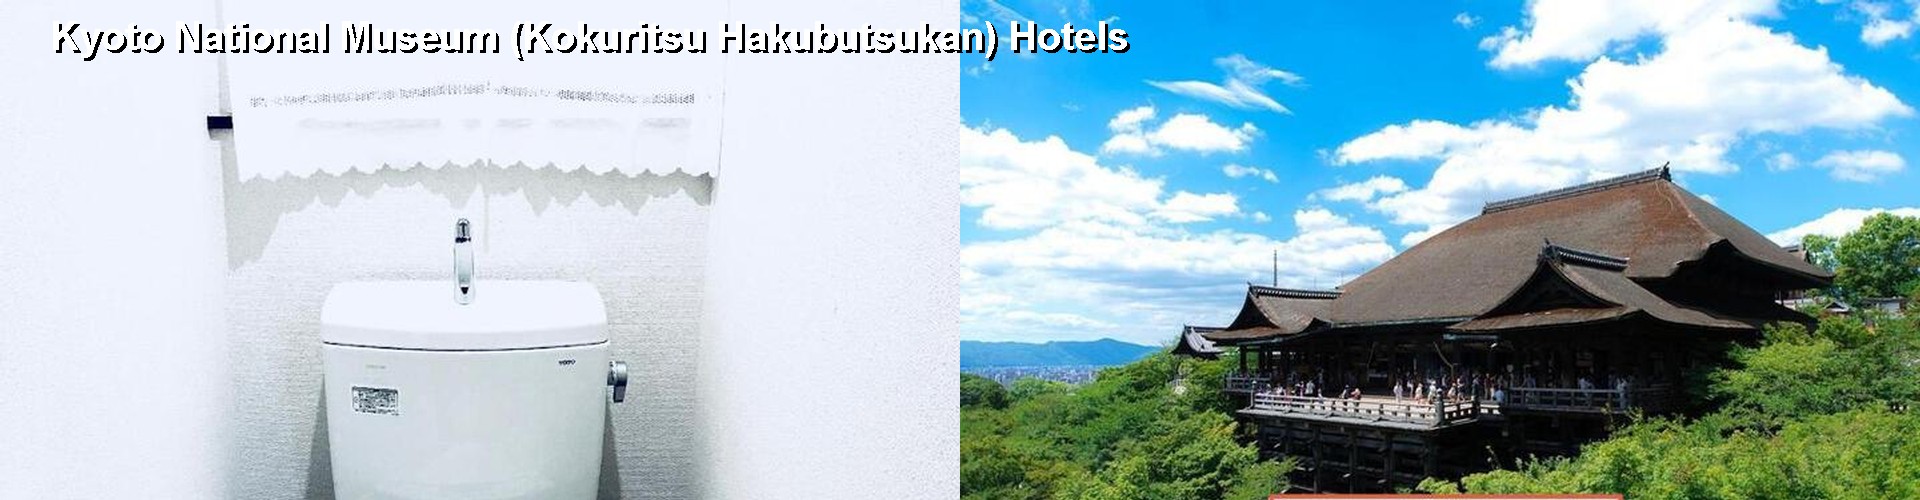 4 Best Hotels near Kyoto National Museum (Kokuritsu Hakubutsukan)